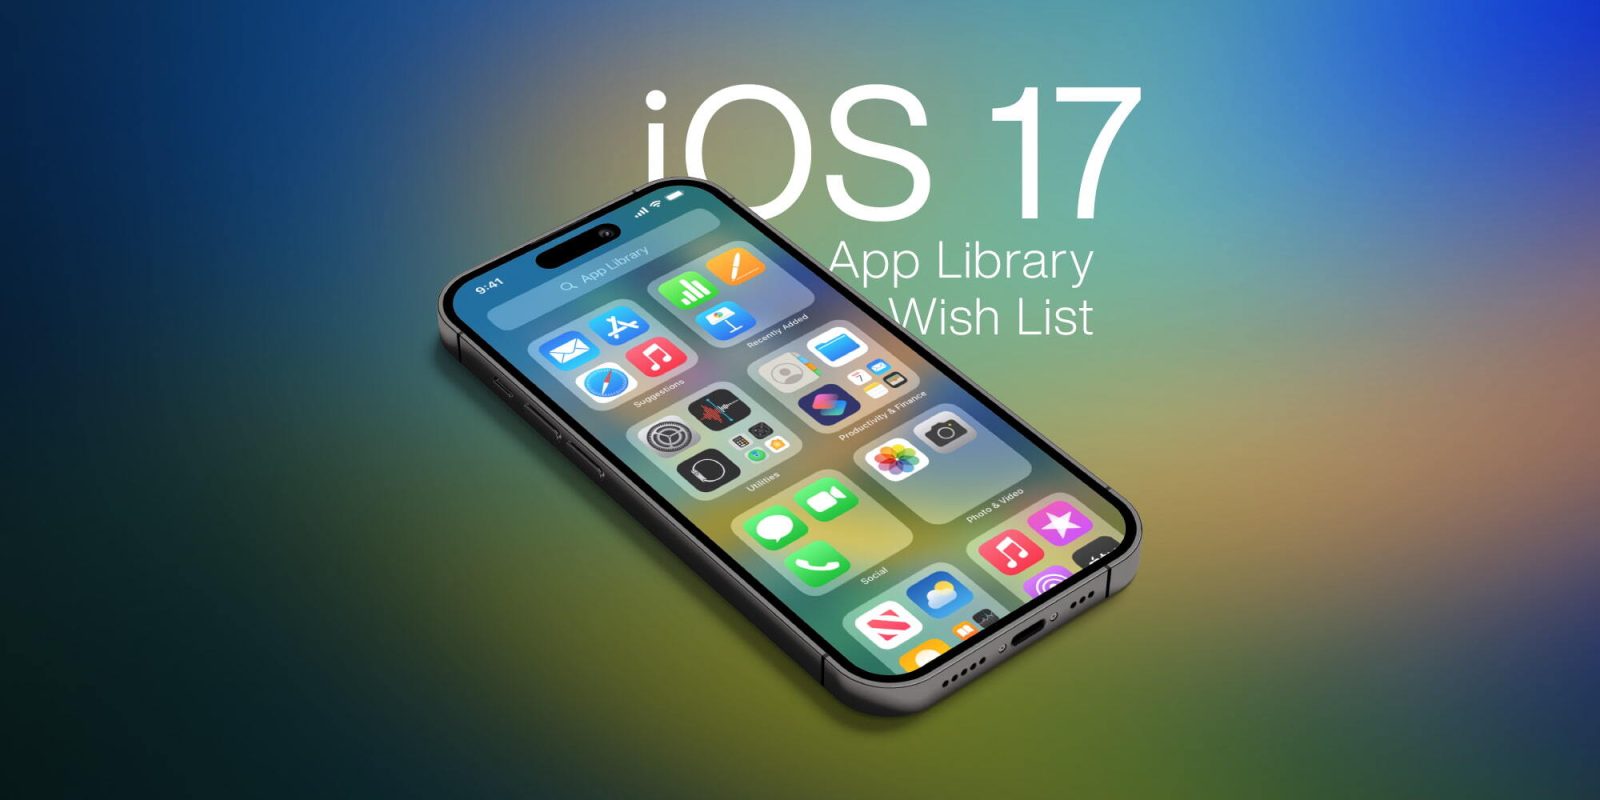 iOS 17 features